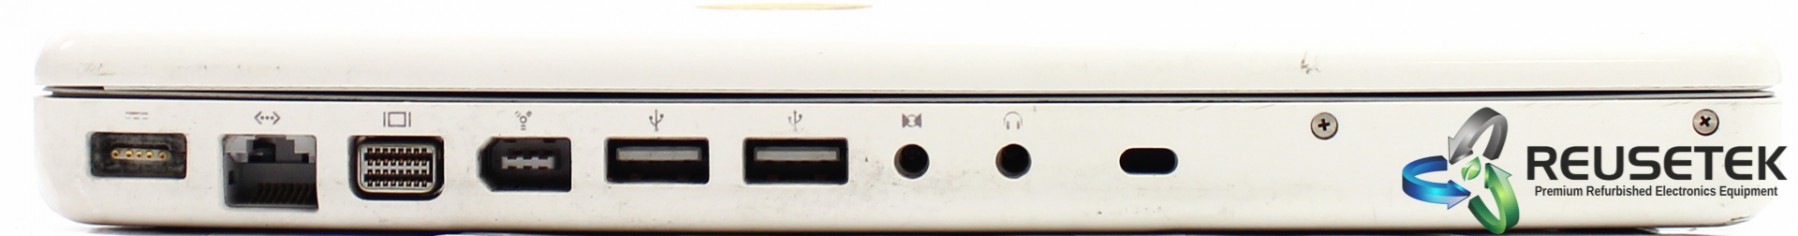 500031769303-Apple Macbook A1181 (MB403LL/A) 13" Notebook Laptop-image